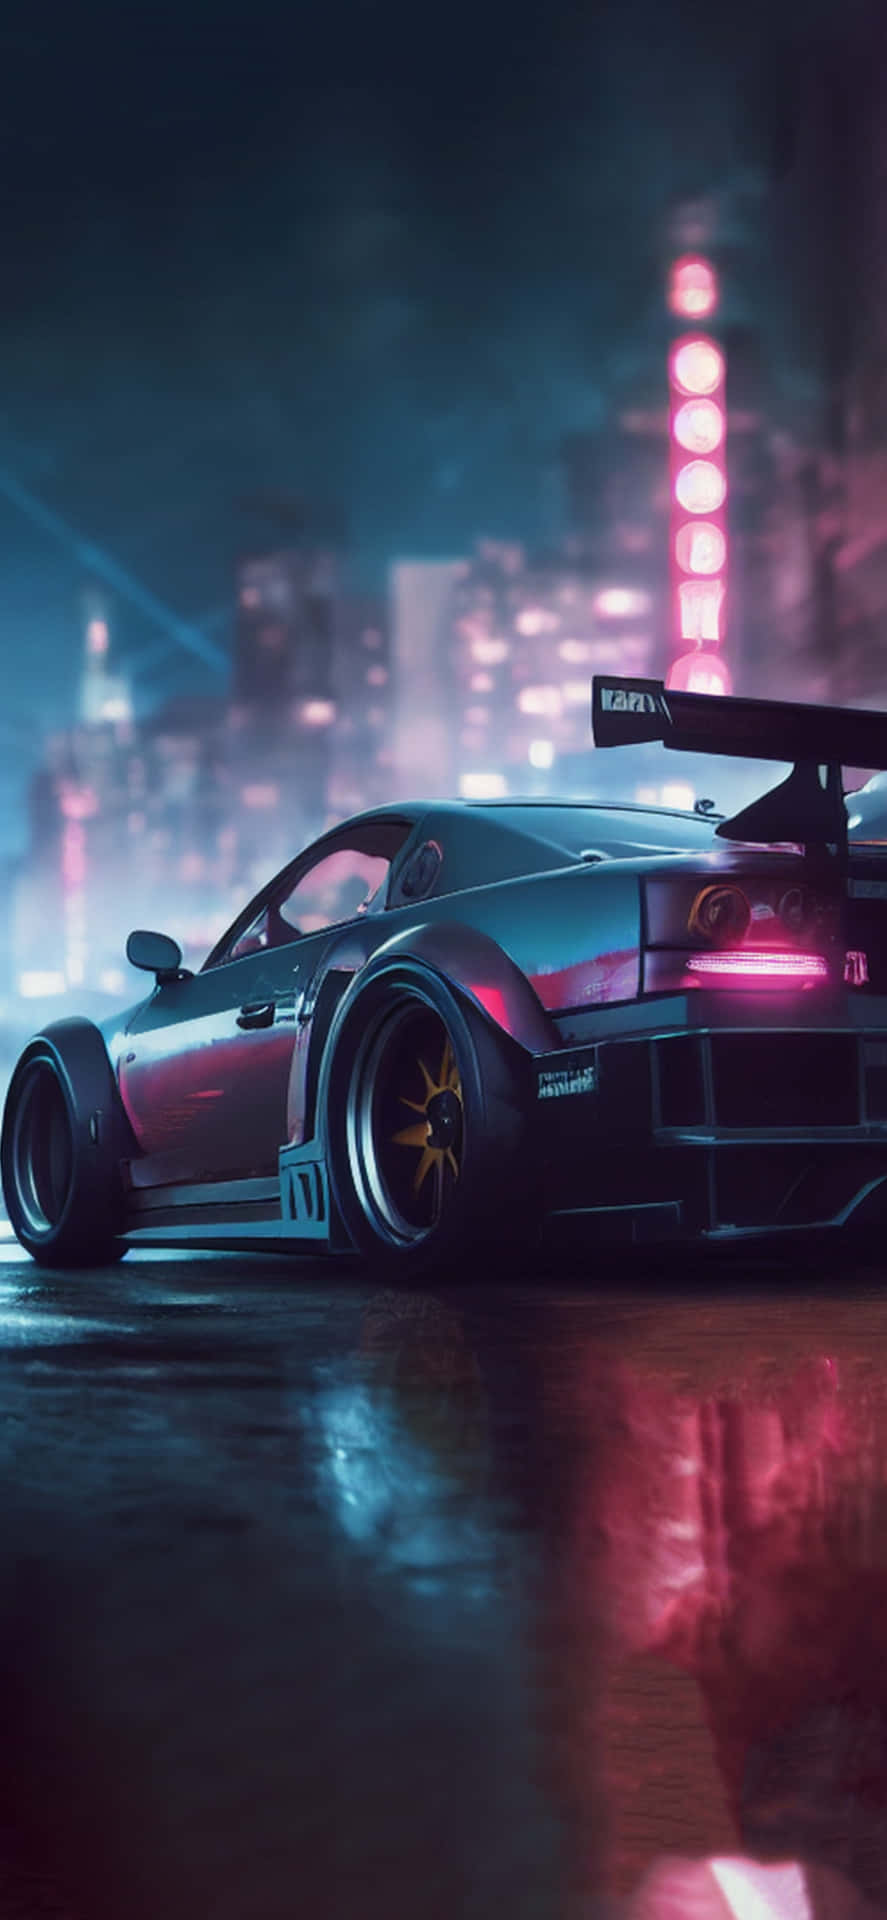 Pixel3 Need For Speed Bakgrund Neonljus Gata